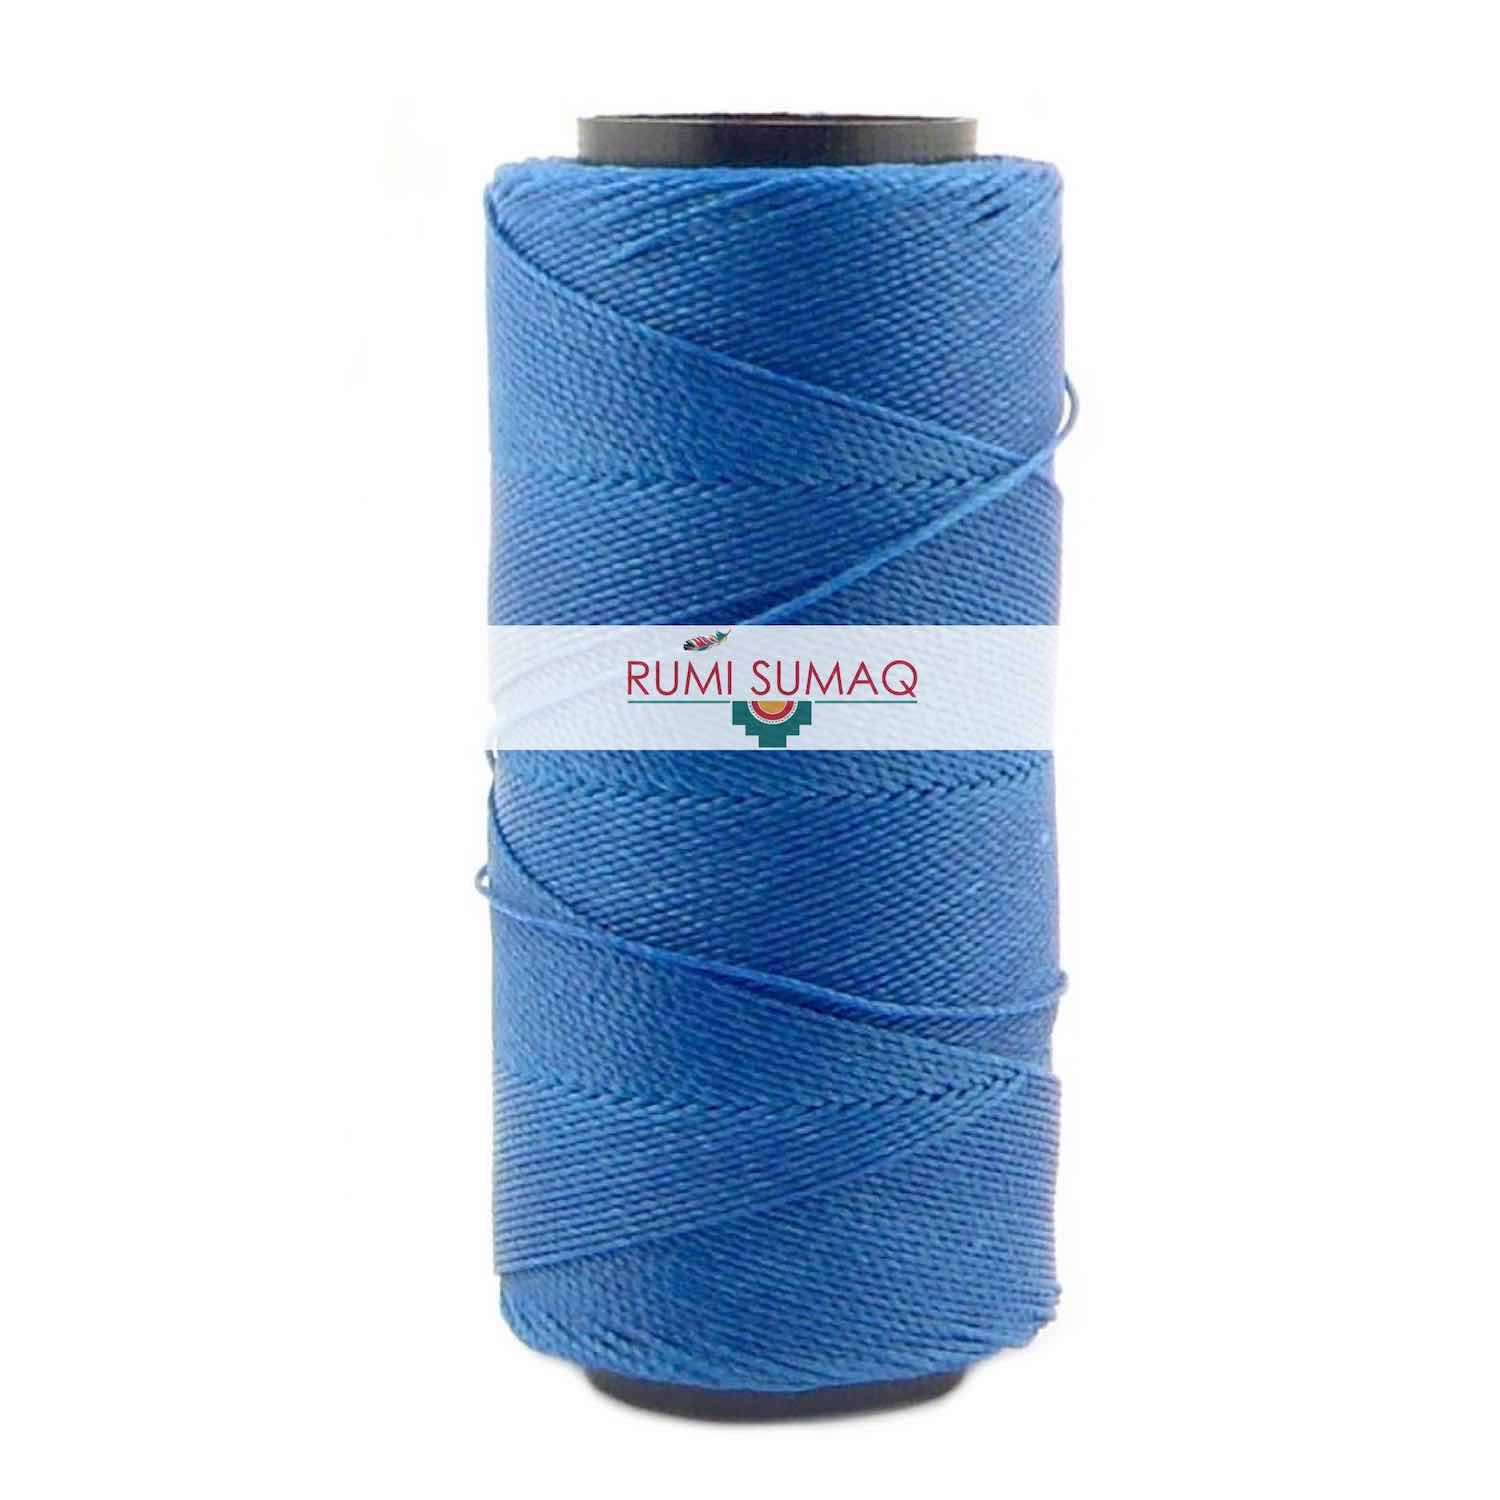 Settanyl 05-692 Cobalt Blue Waxed Polyester Cord | RUMI SUMAQ Setta Encerada 1mm Brazilian Waxed Thread